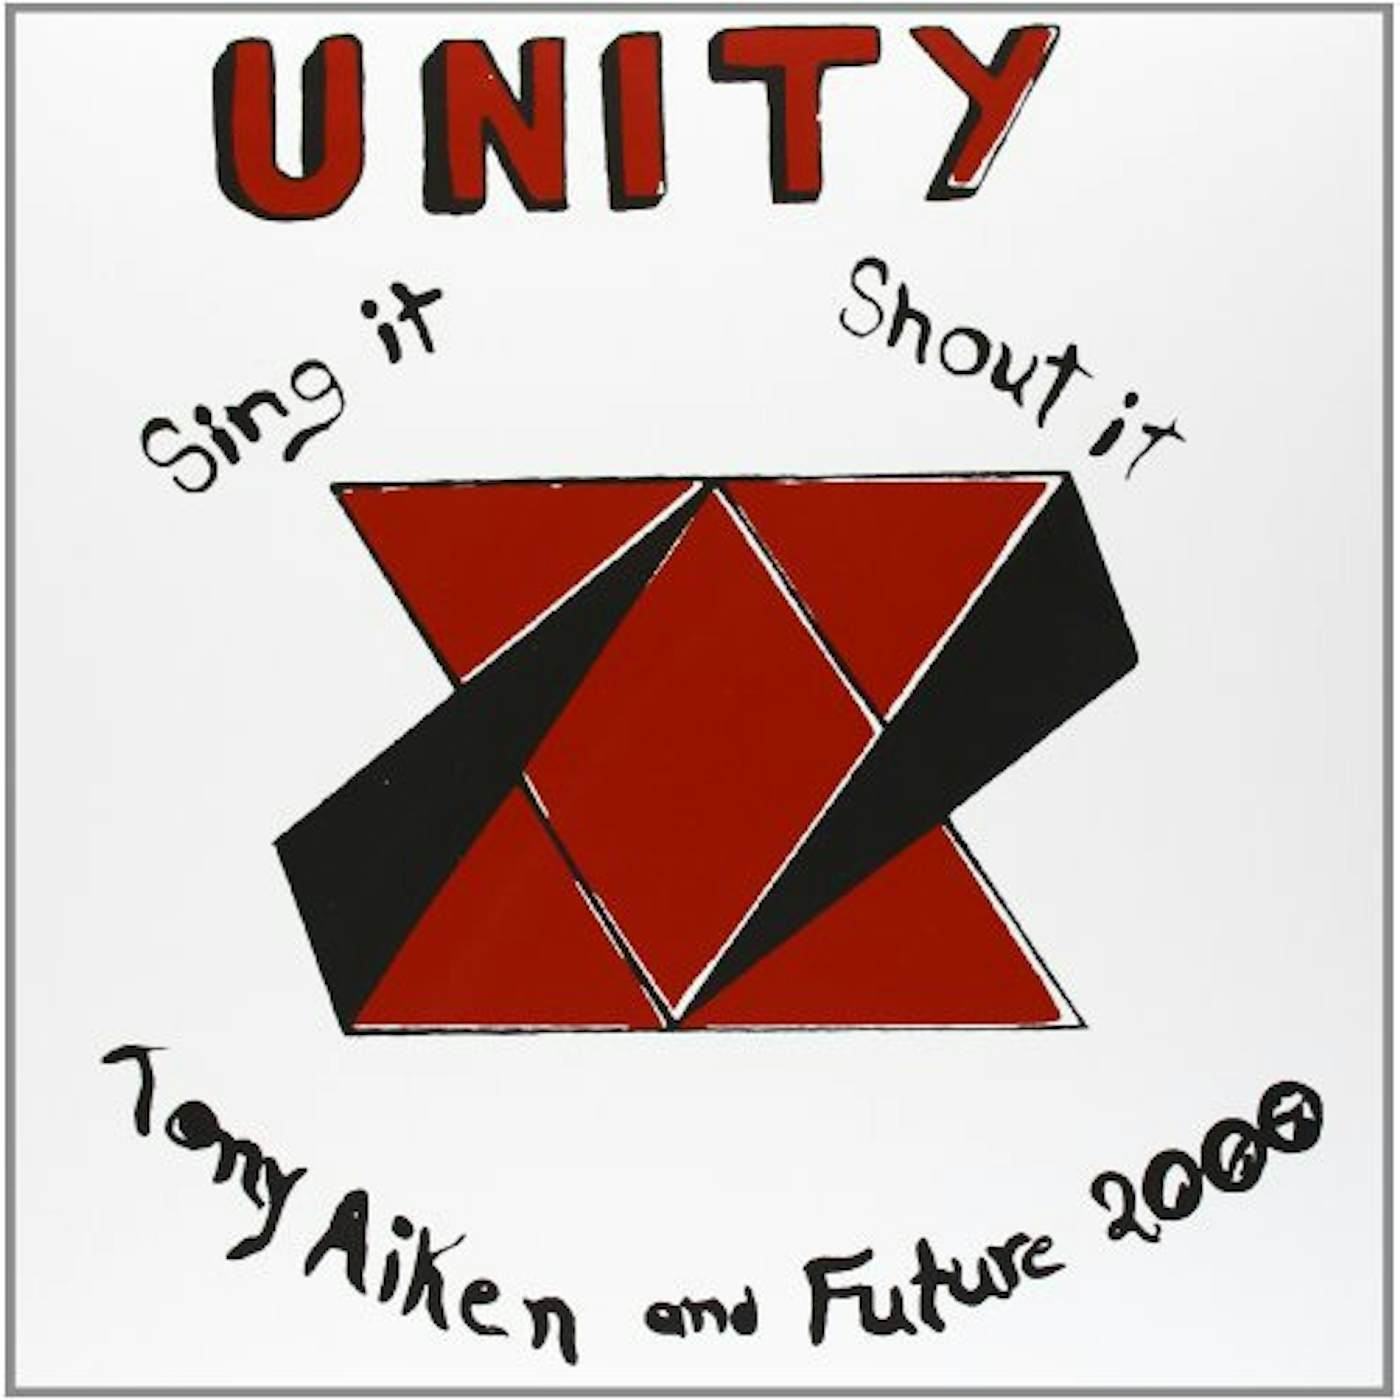 Tony Aiken and Future 2000 Unity Sing It Shout It Vinyl Record